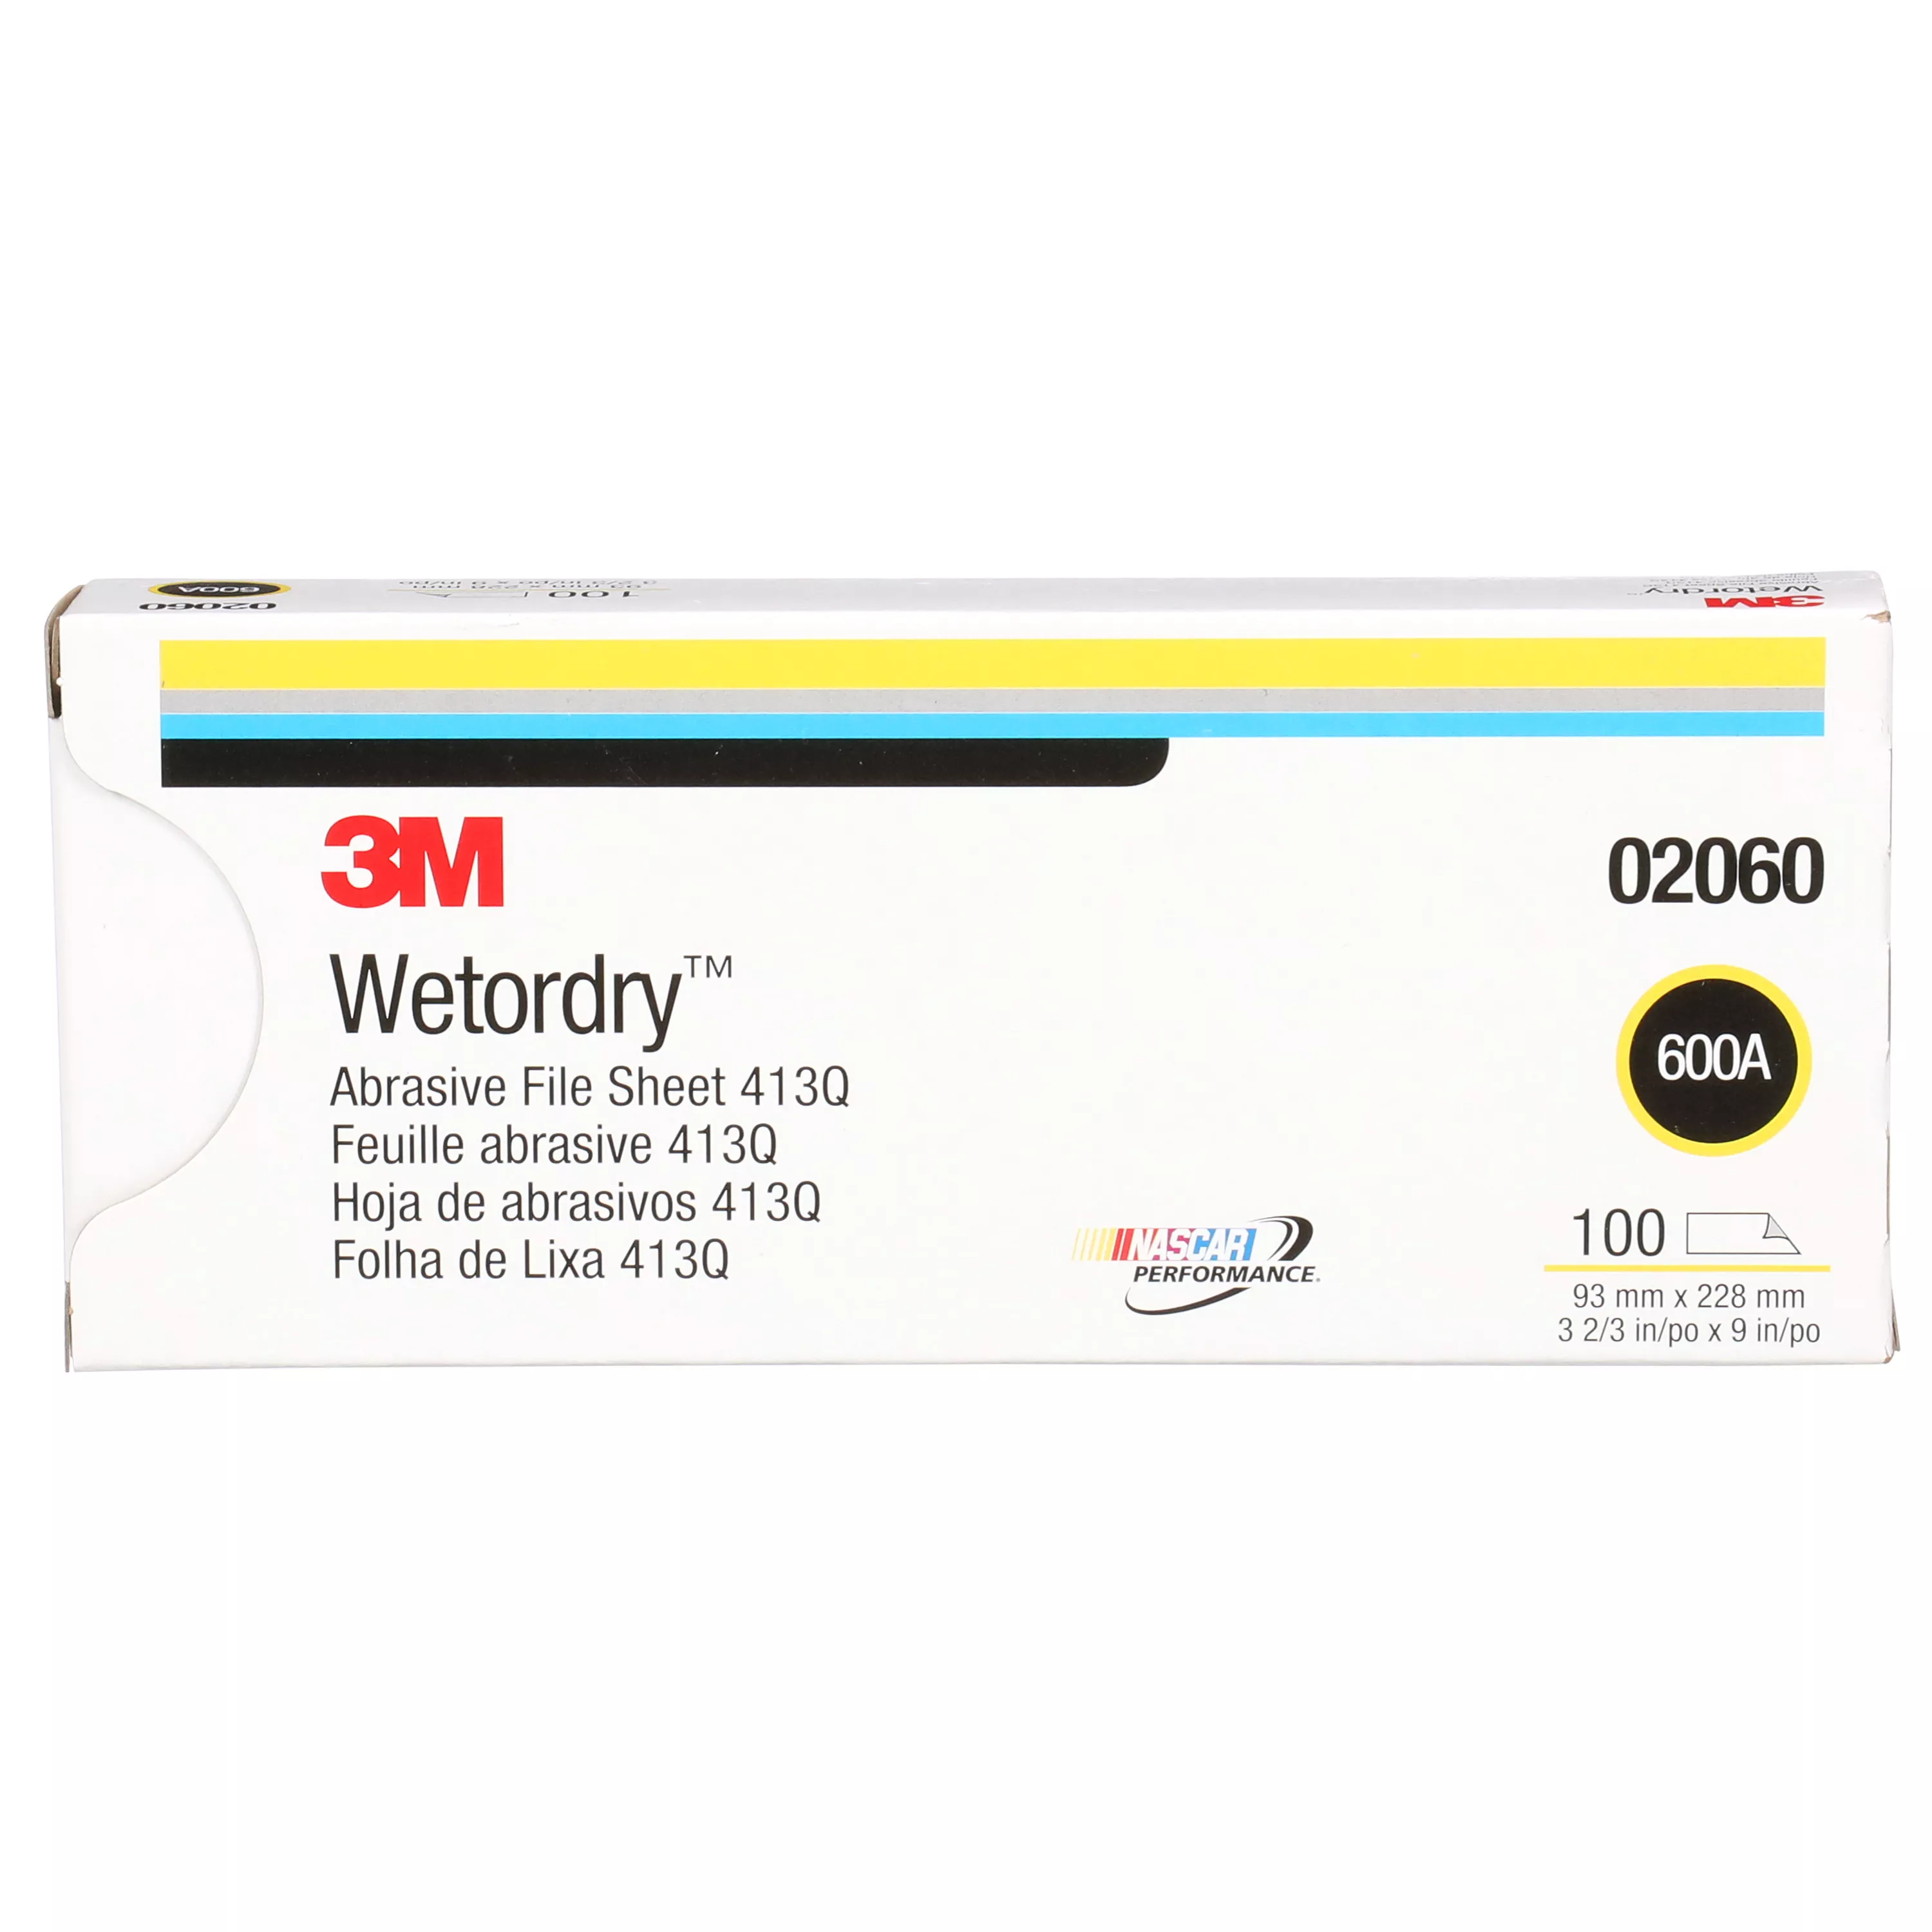 3M™ Wetordry™ Abrasive Sheet 413Q, 02060, 600, 3 2/3 in x 9 in, 100
Sheets/Carton, 10 Cartons/Case